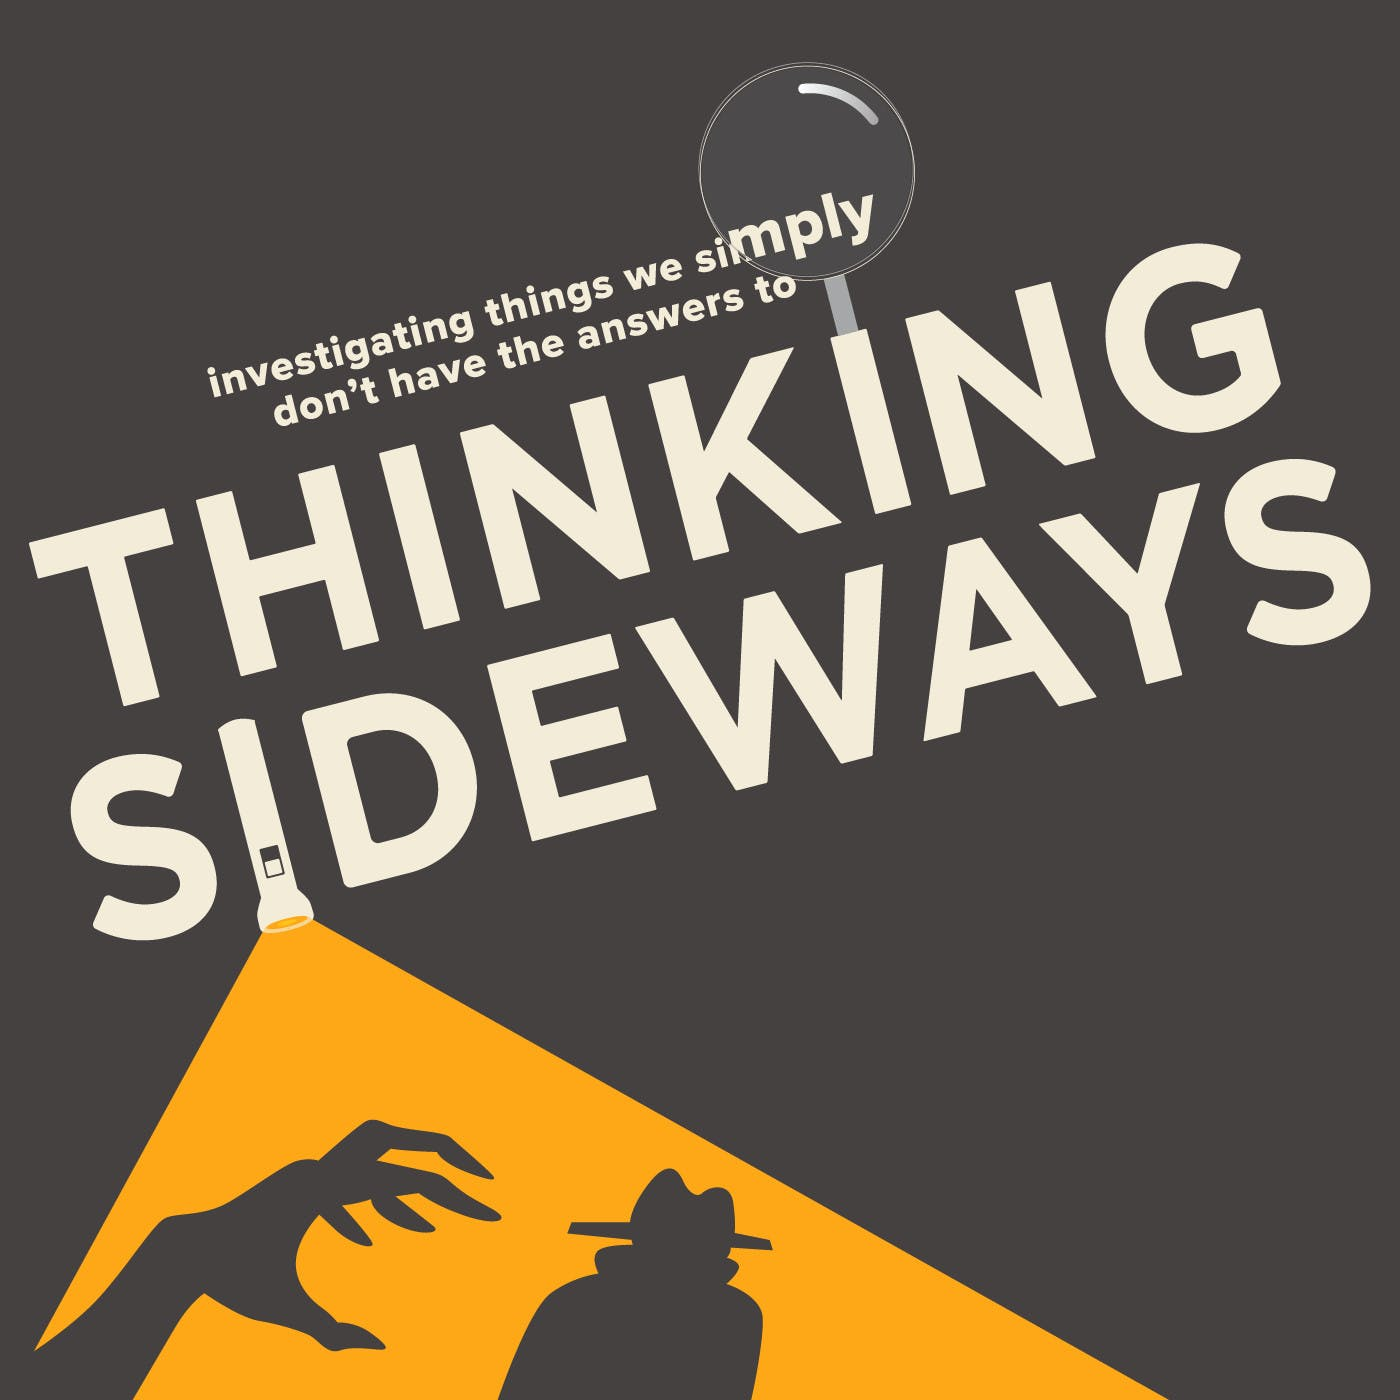 Thinking Sideways: The Nazi Bell